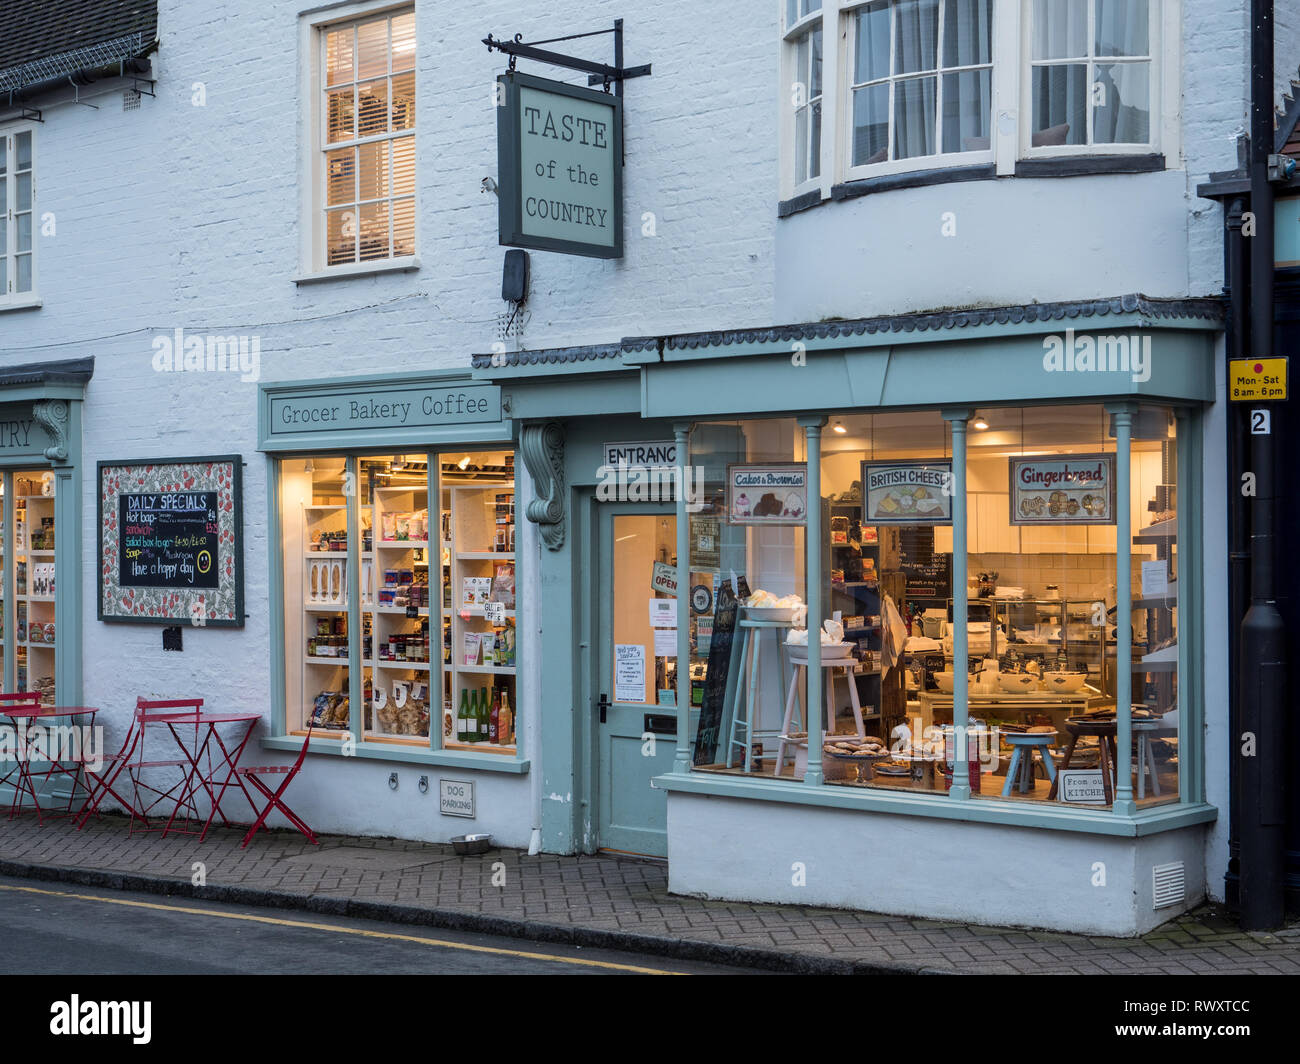 Il gusto del paese shop frontage in Shipston on Stour Warwickshire England Regno Unito Foto Stock